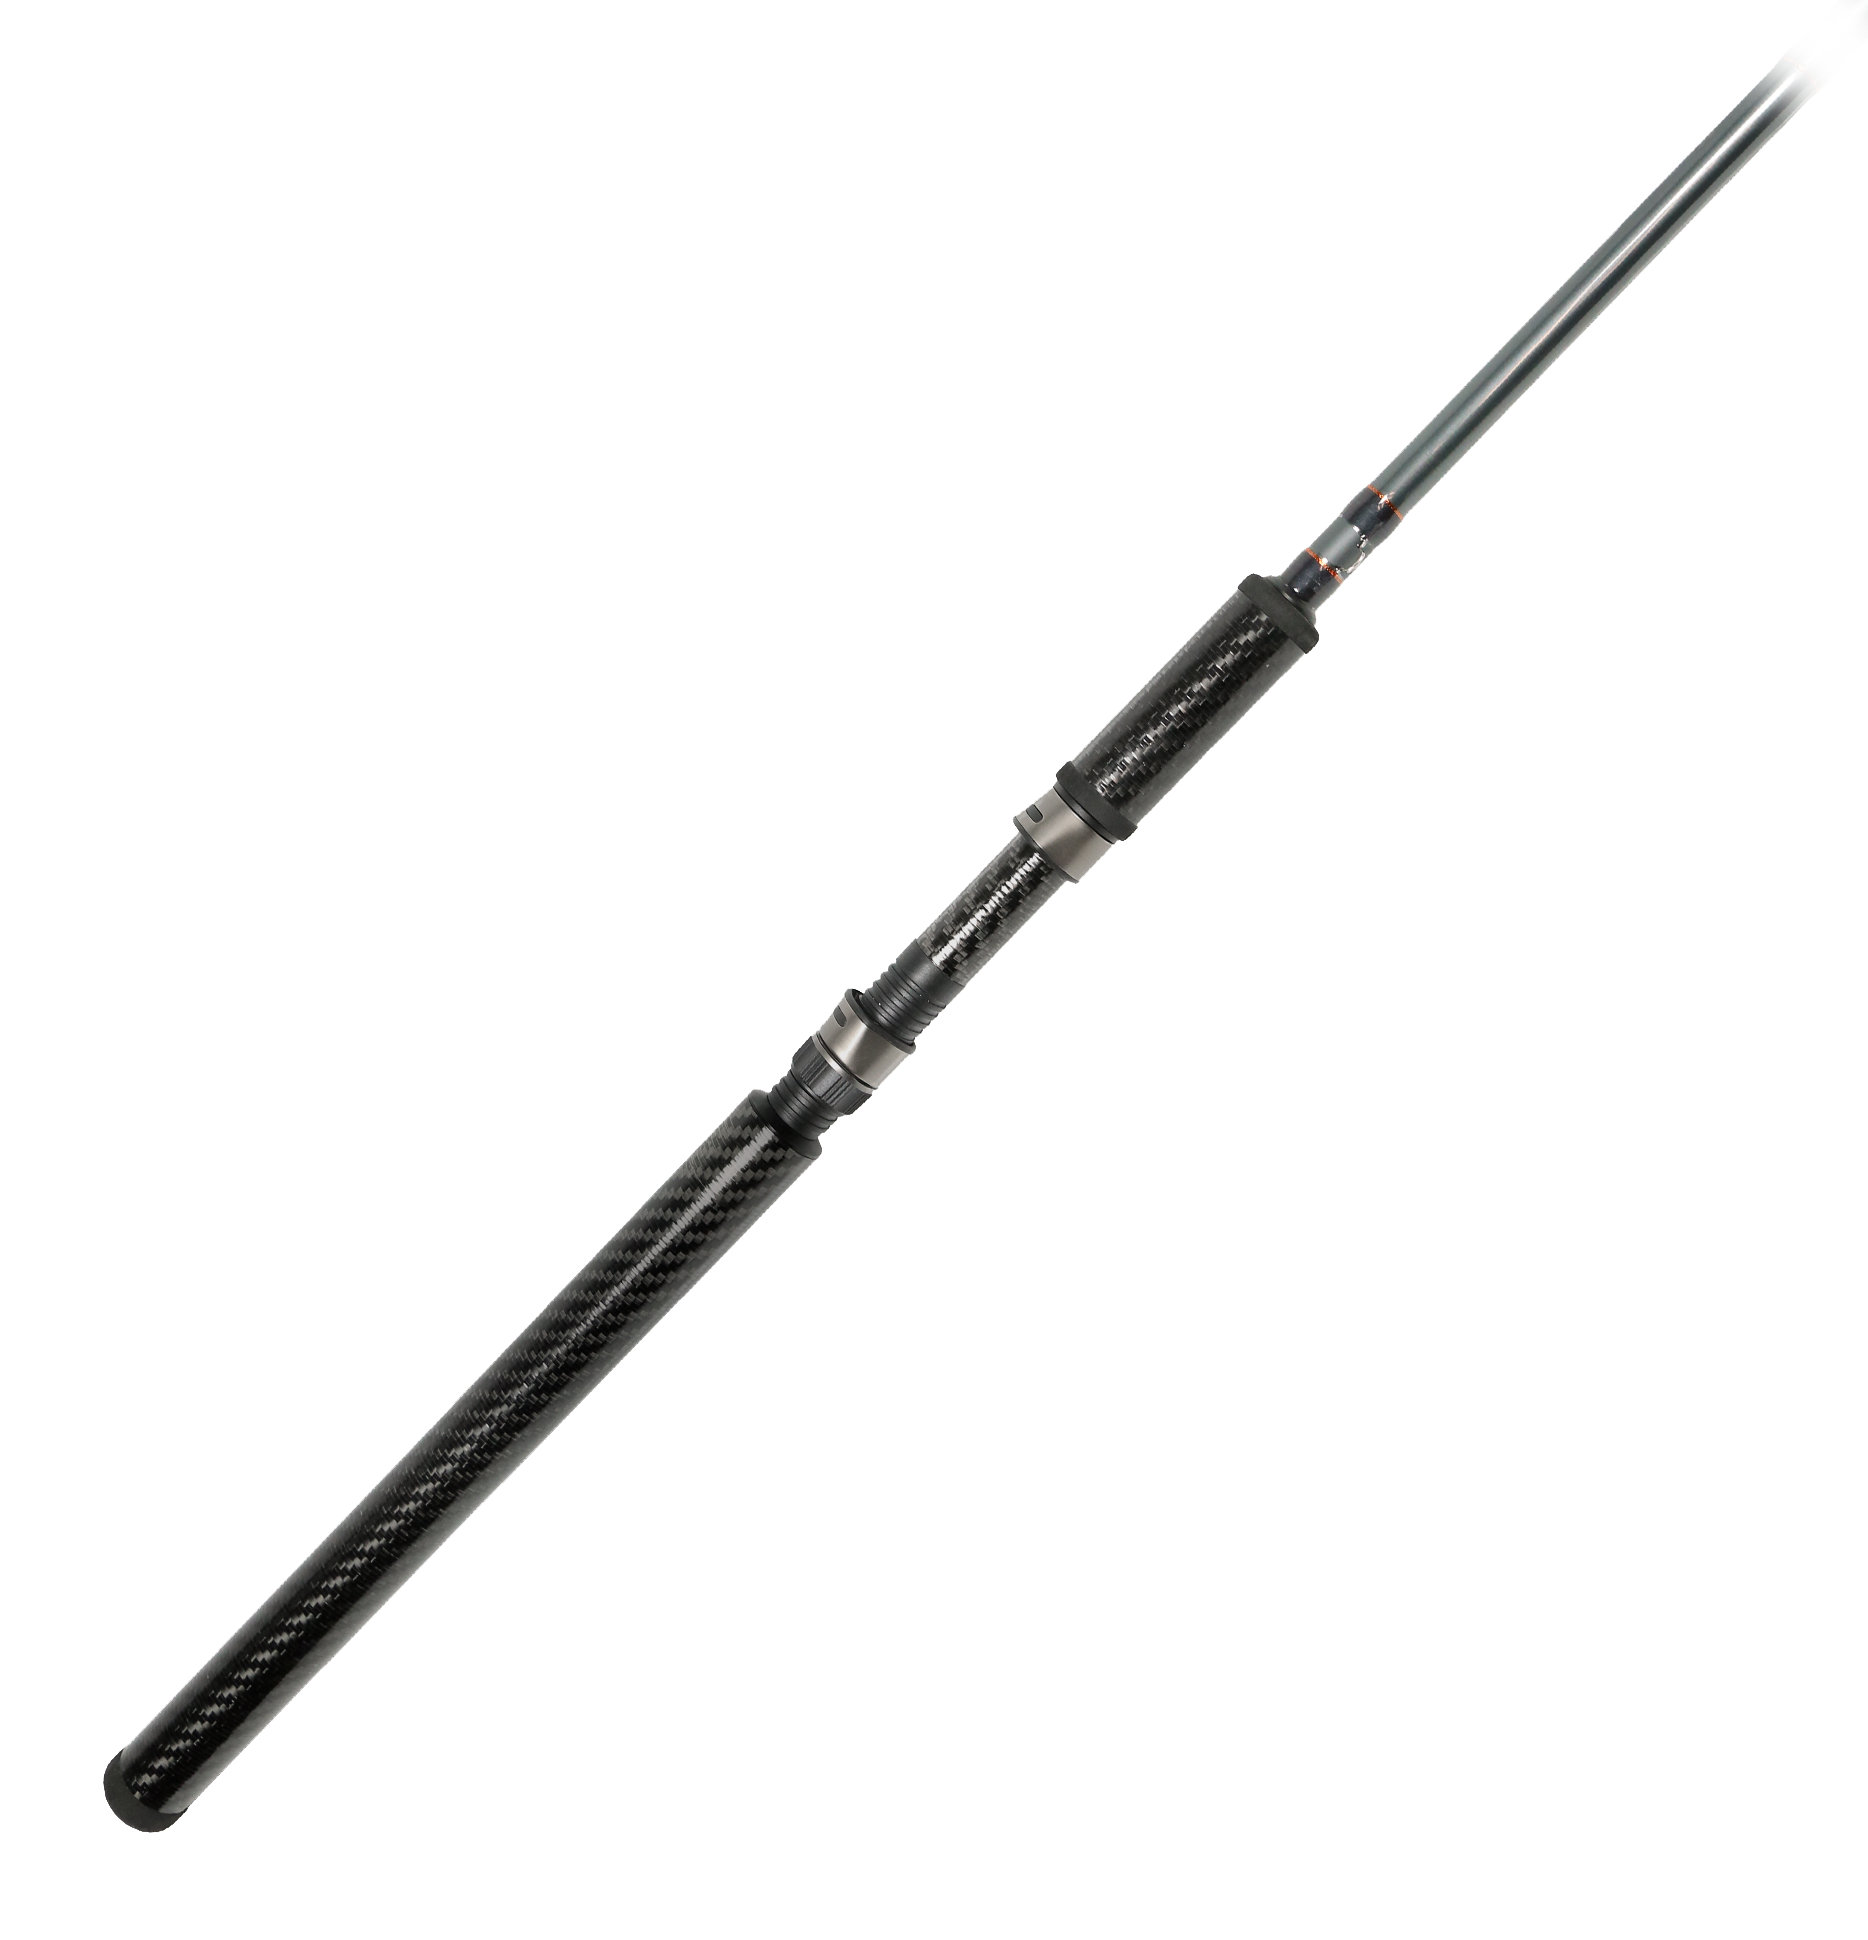  Okuma Longitude Surf Graphite Rods (Large, Black/Blue/Silver),  10' : Spinning Fishing Rods : Sports & Outdoors